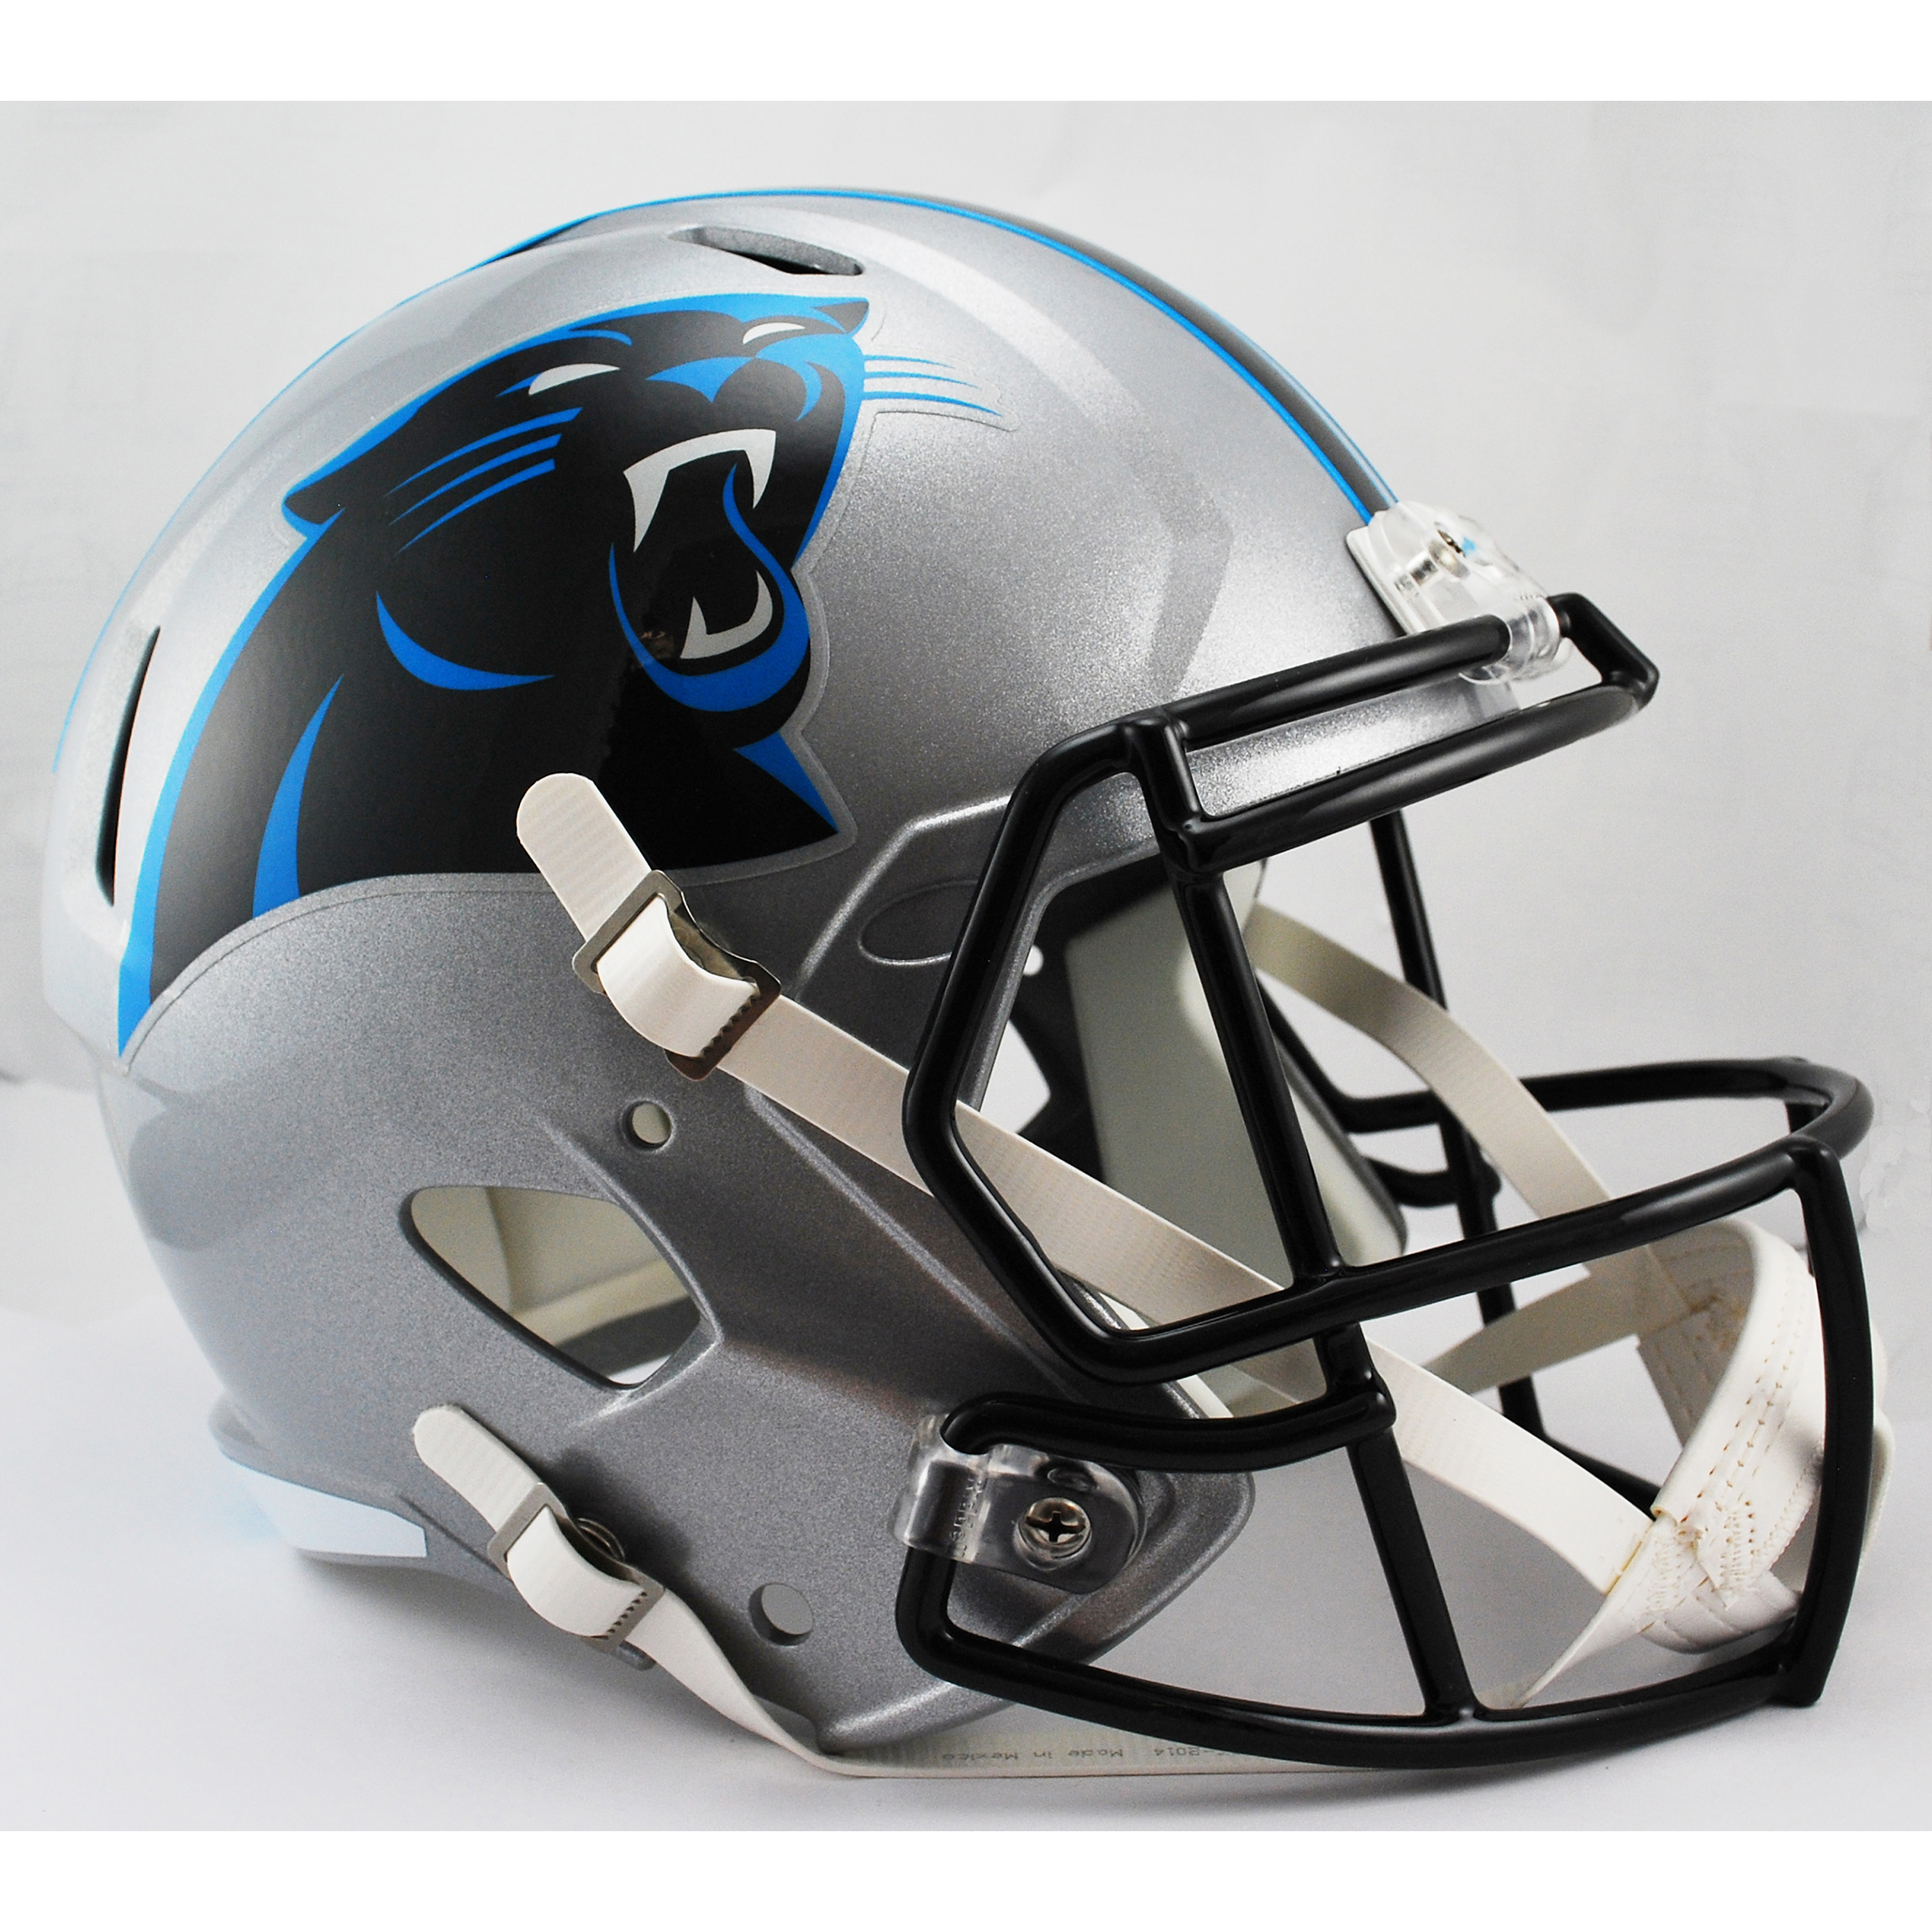 Riddell Nfl Speed Replica Helm Carolina Panthers, Blue/Black